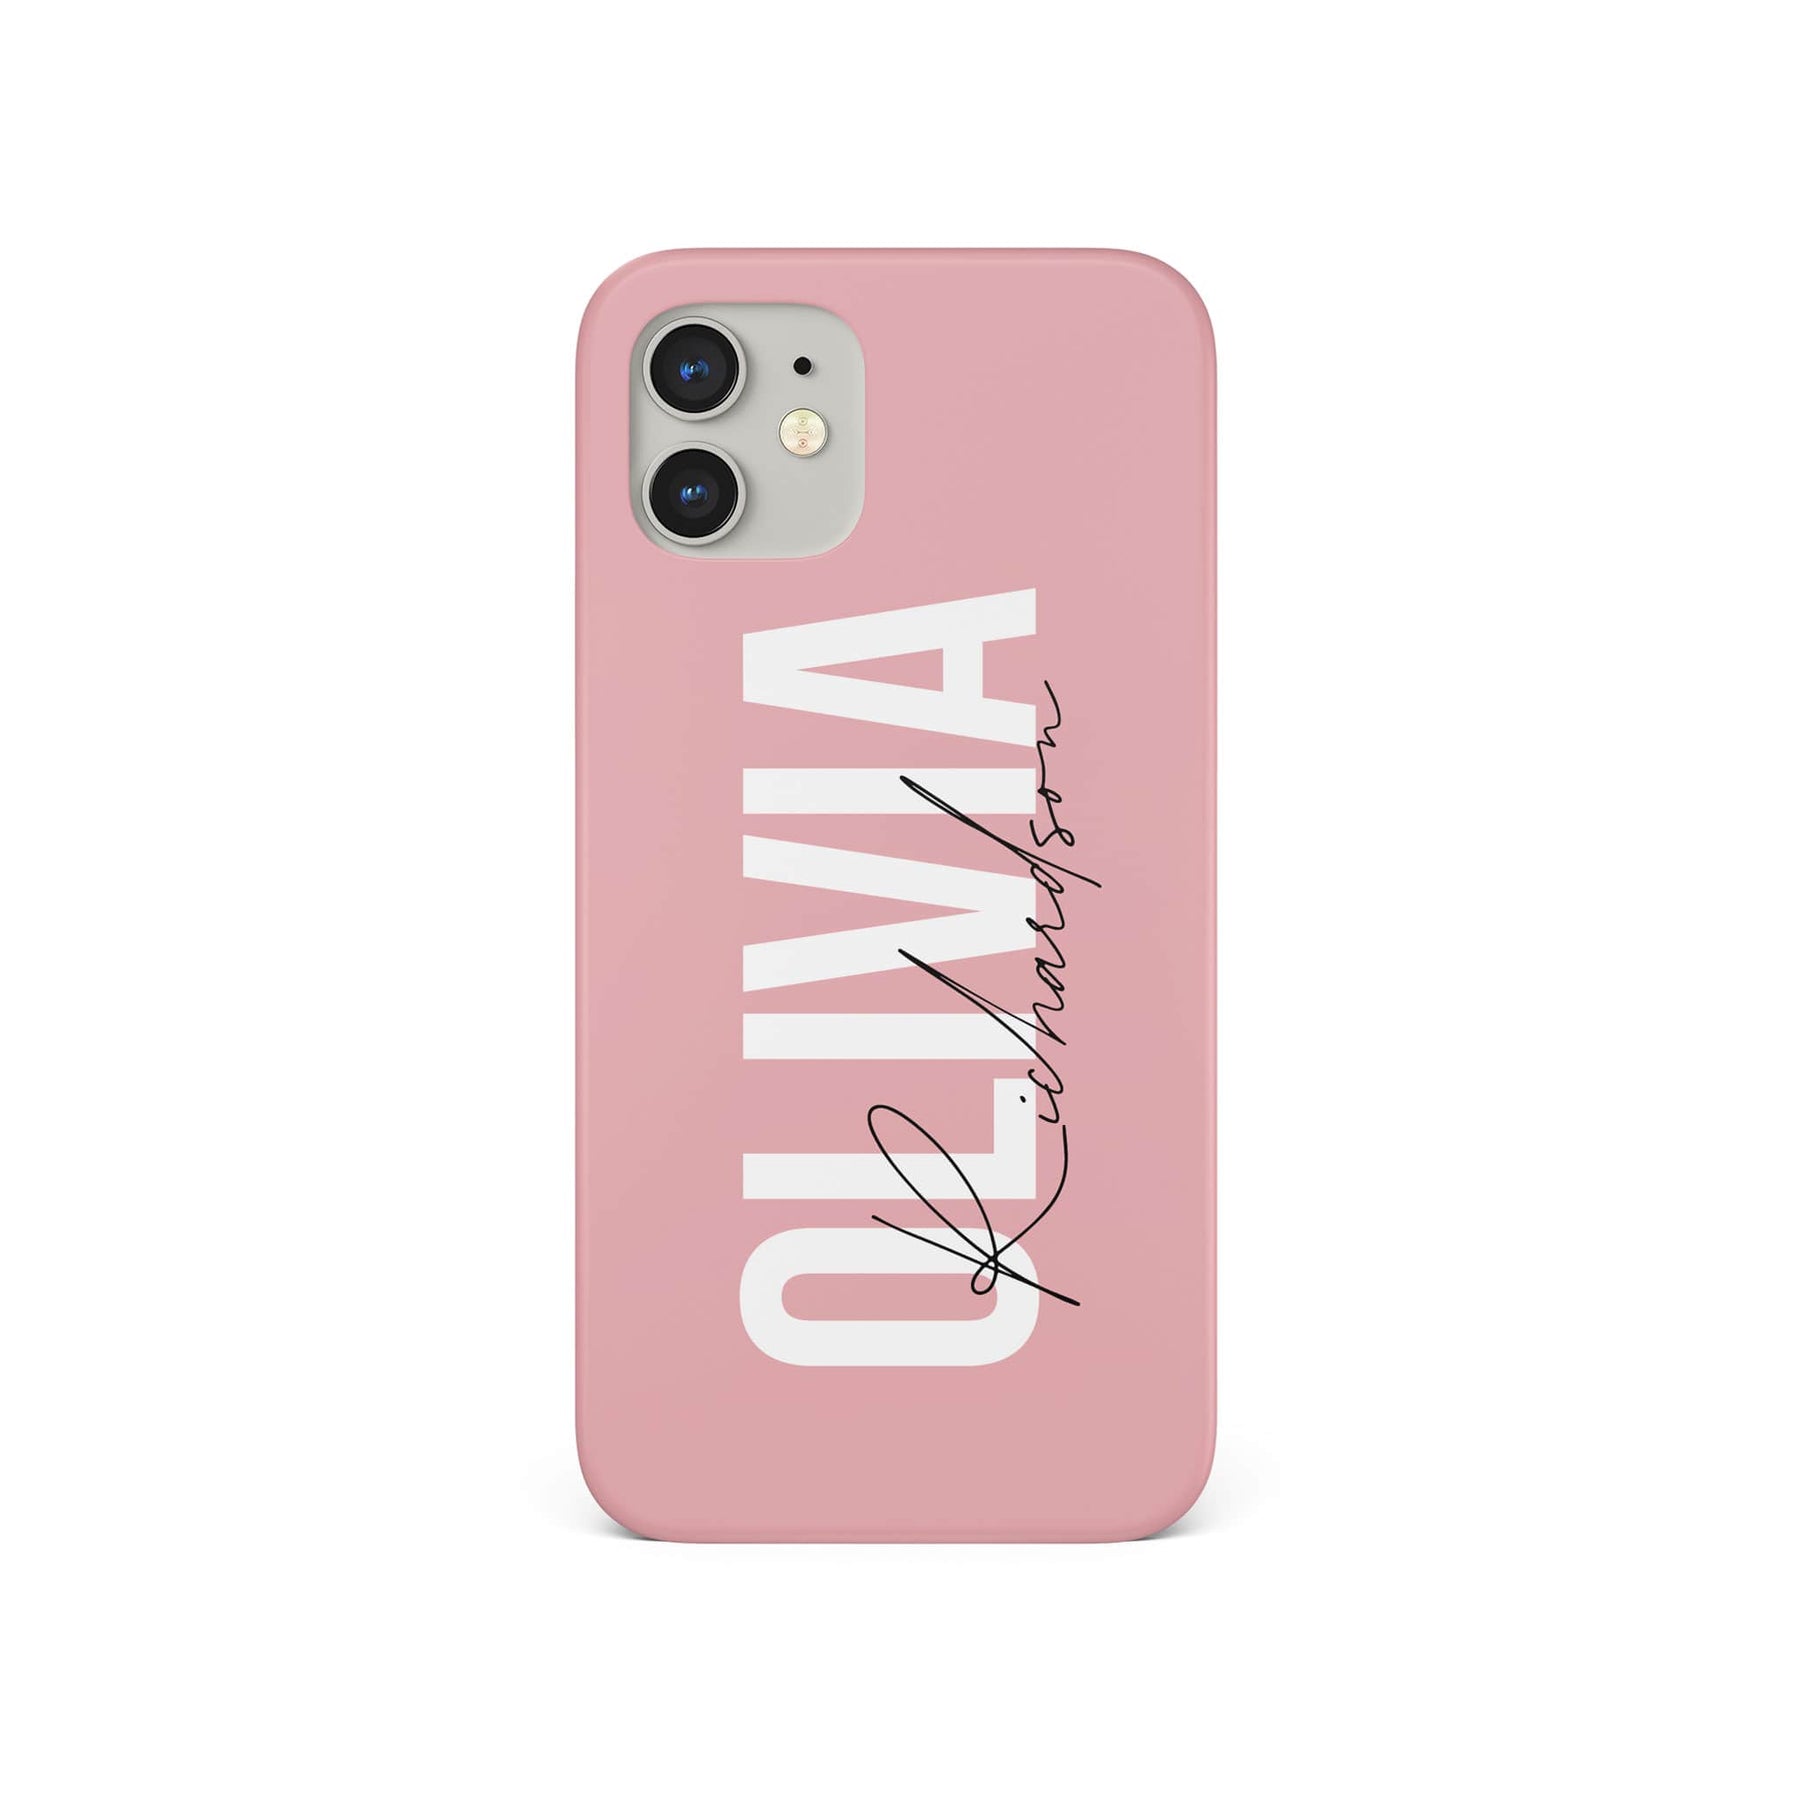 Personalised Hard Phone Case Custom Name White Pink